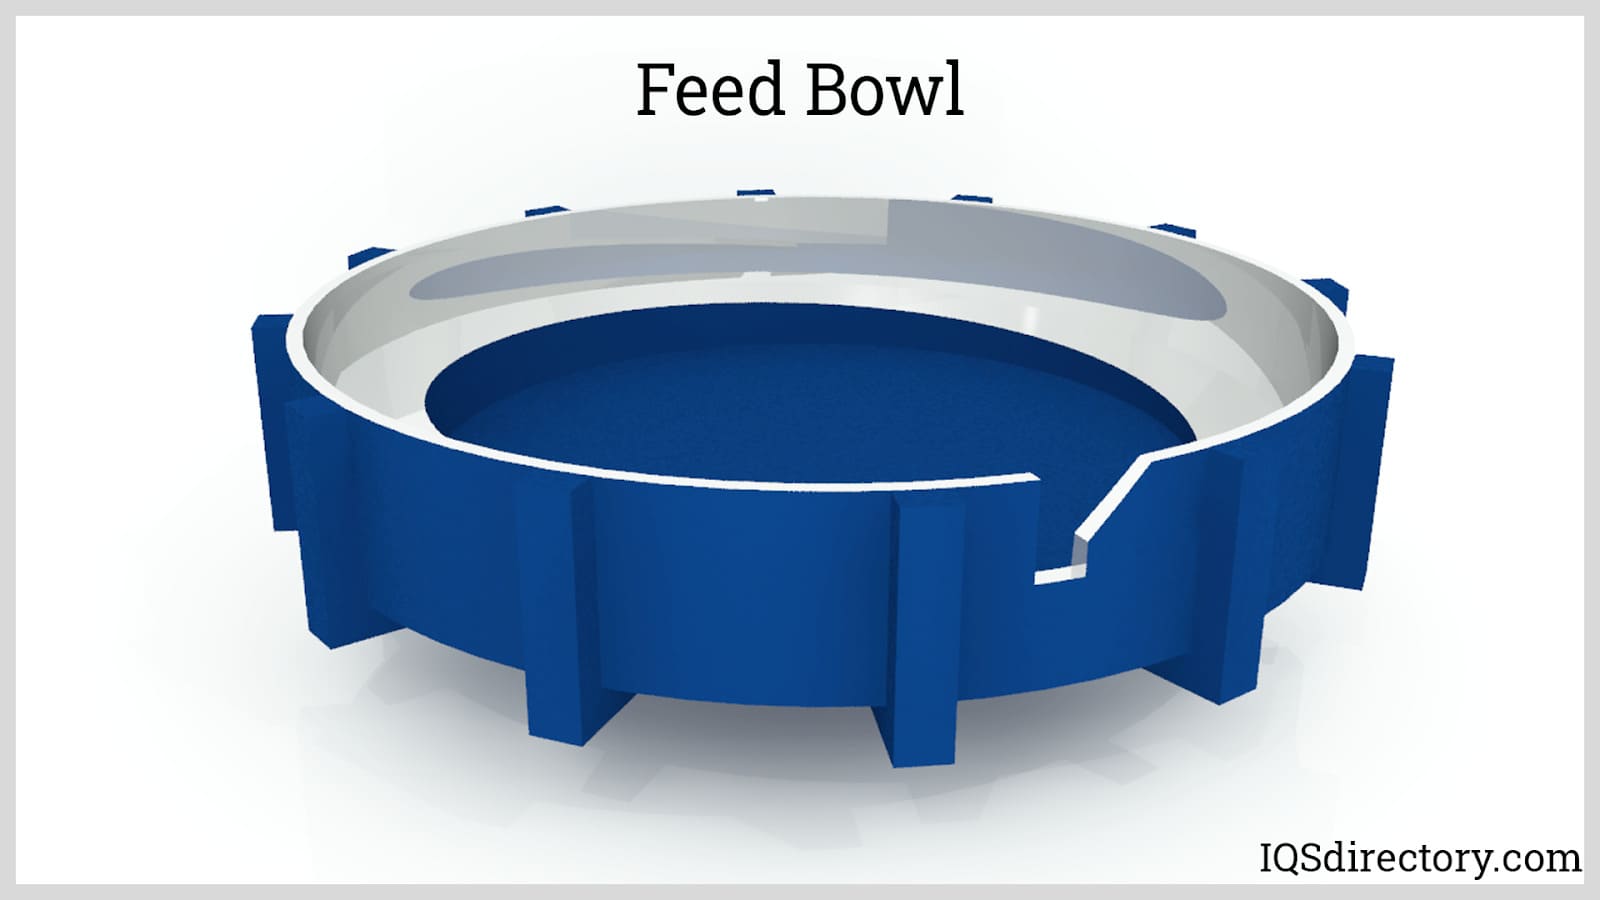 Feed Bowl